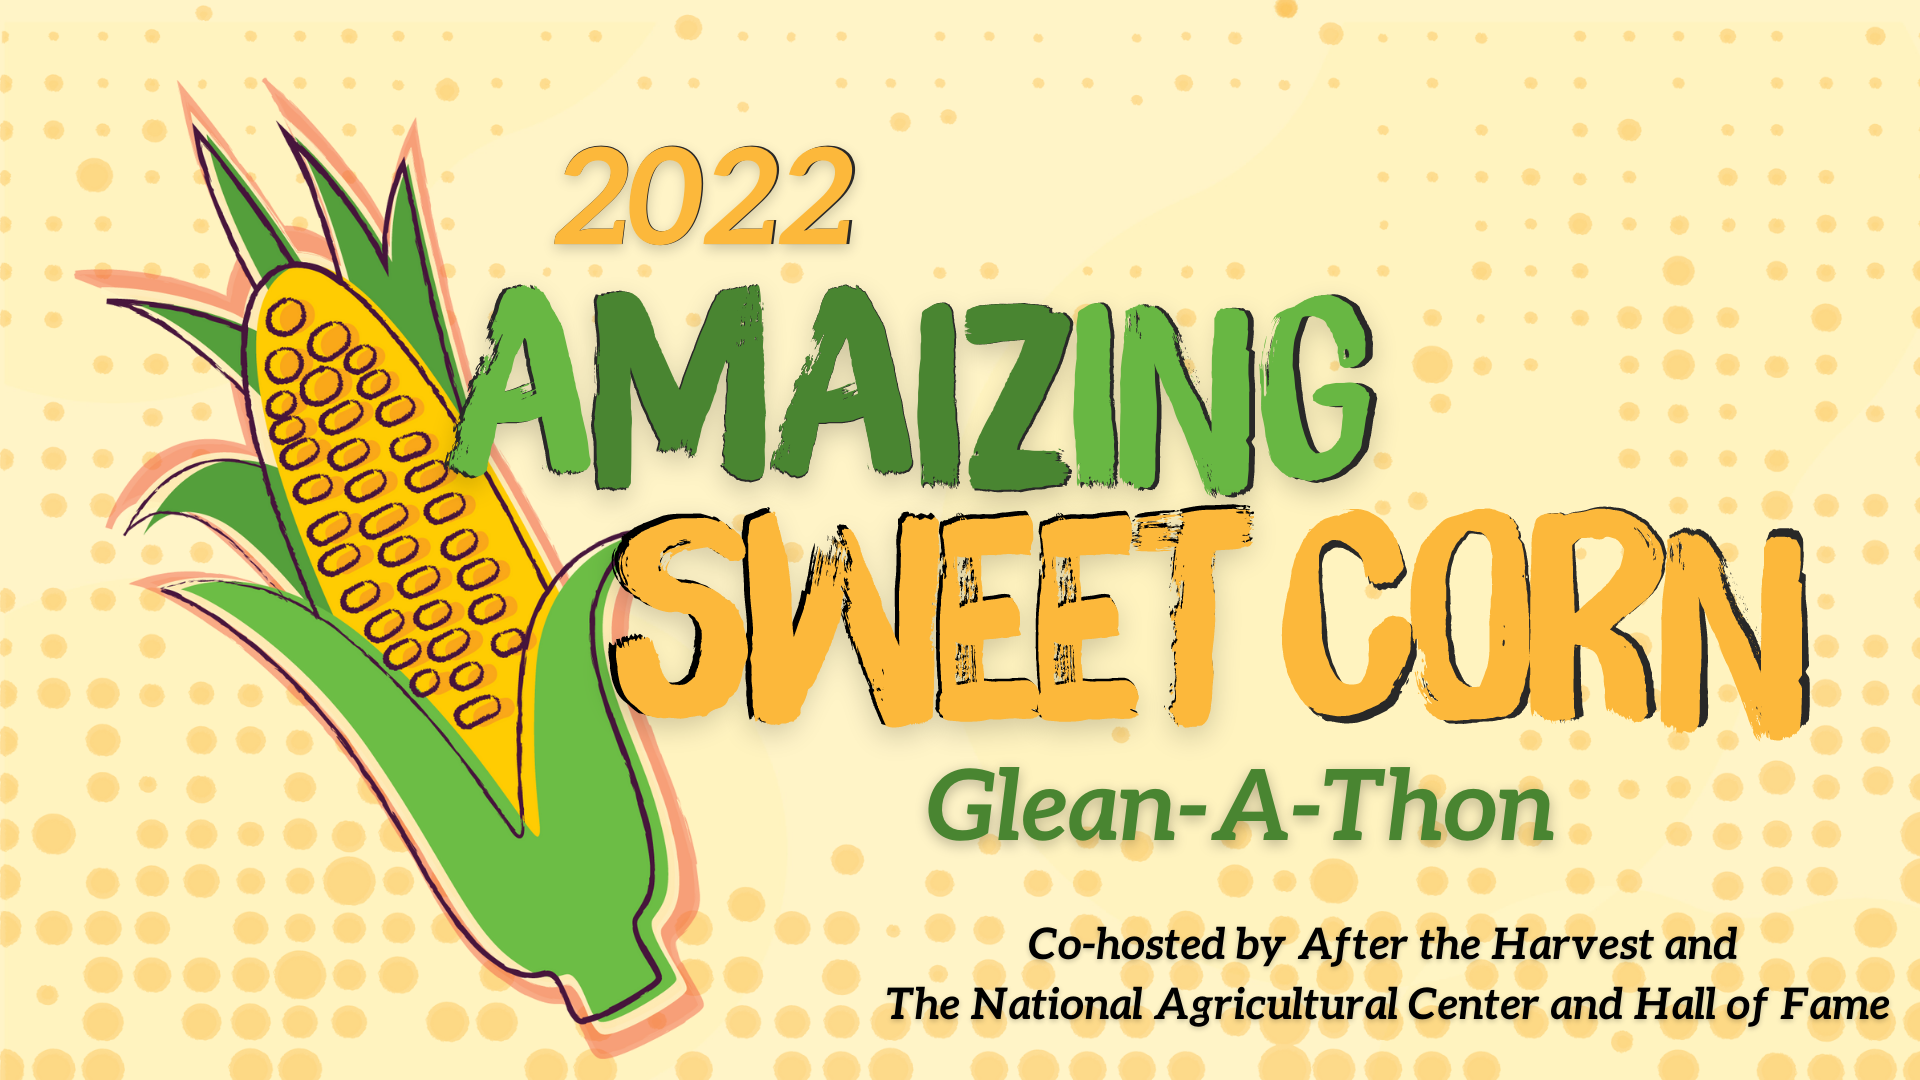 2022 Amaizing Sweet Corn Glena-a-Thon